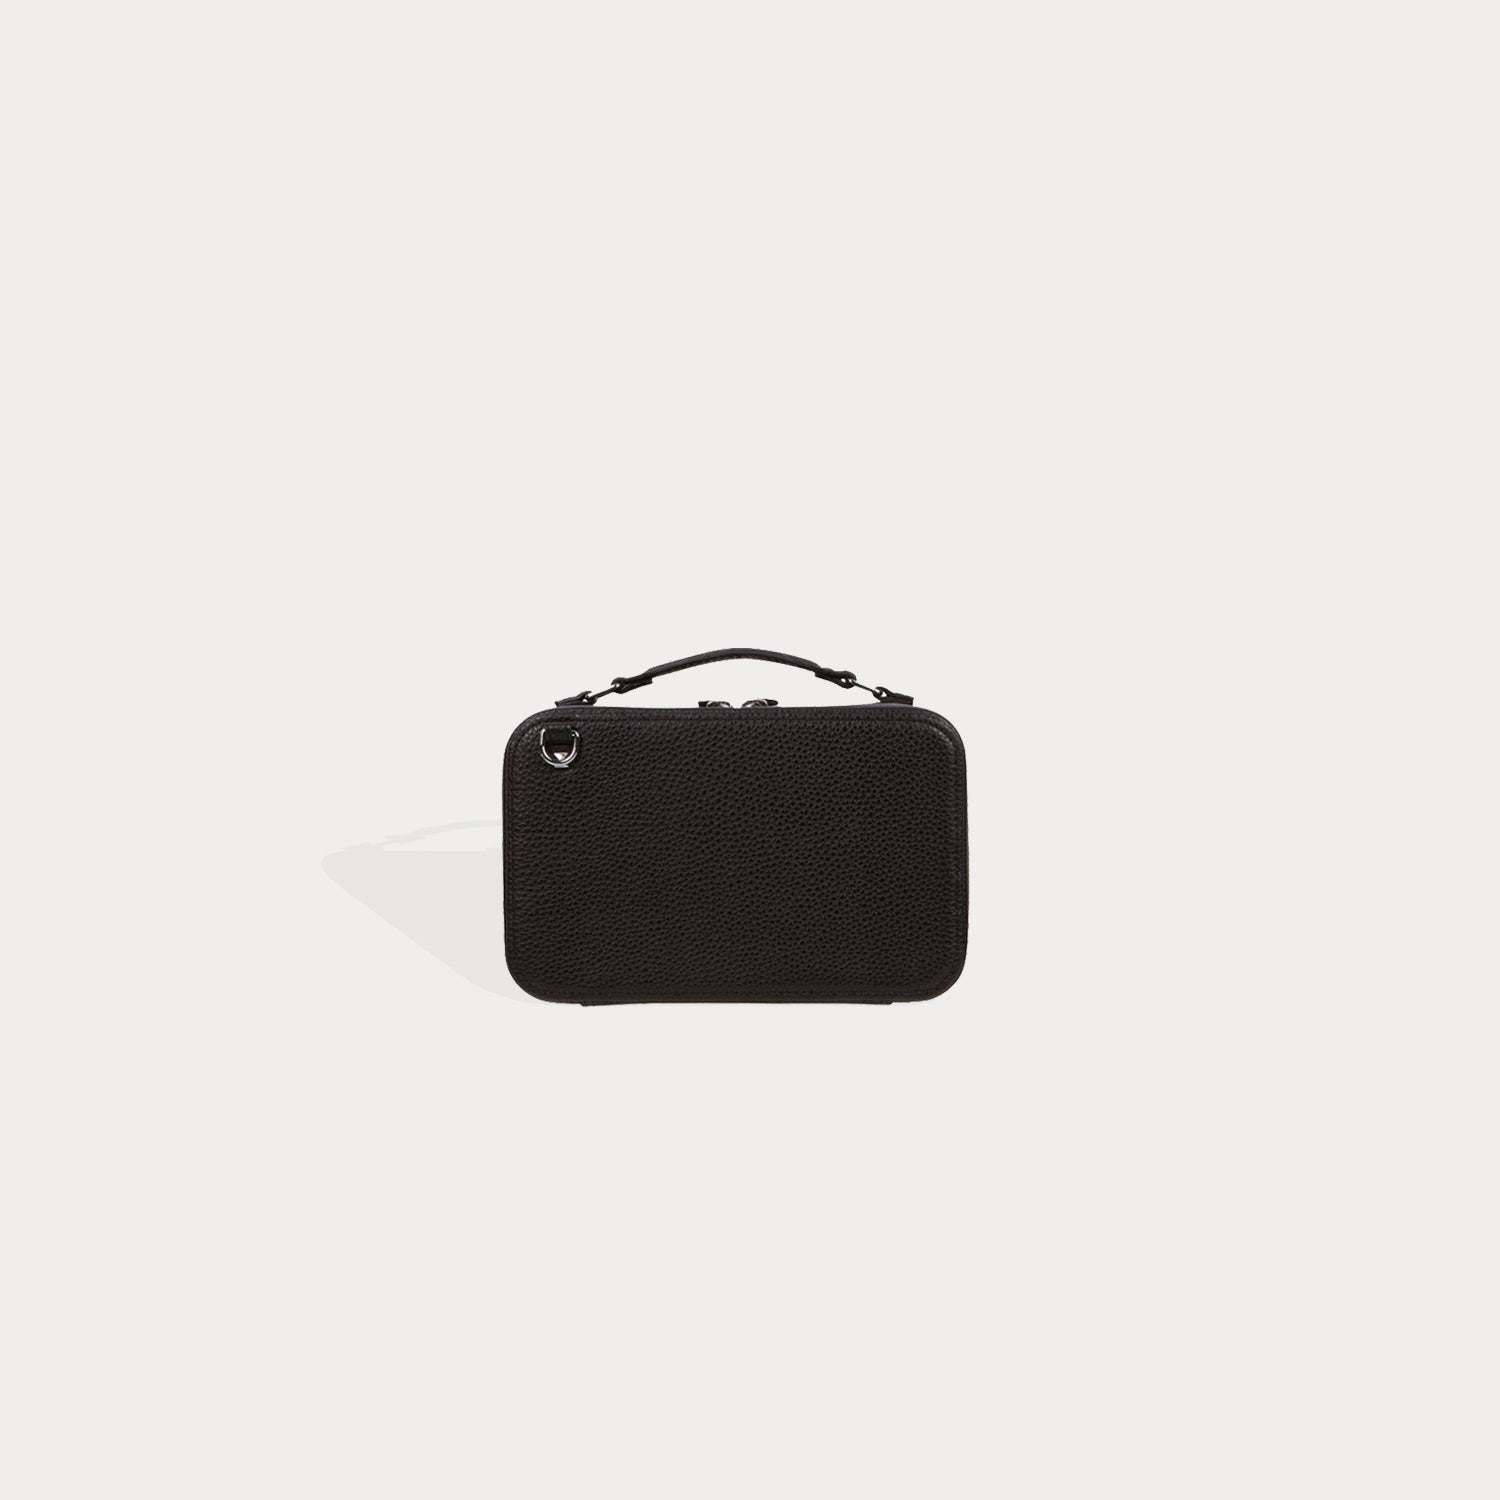 Cameron Convertible Bag - Without Case (Black/Silver) Bags Bandolier 